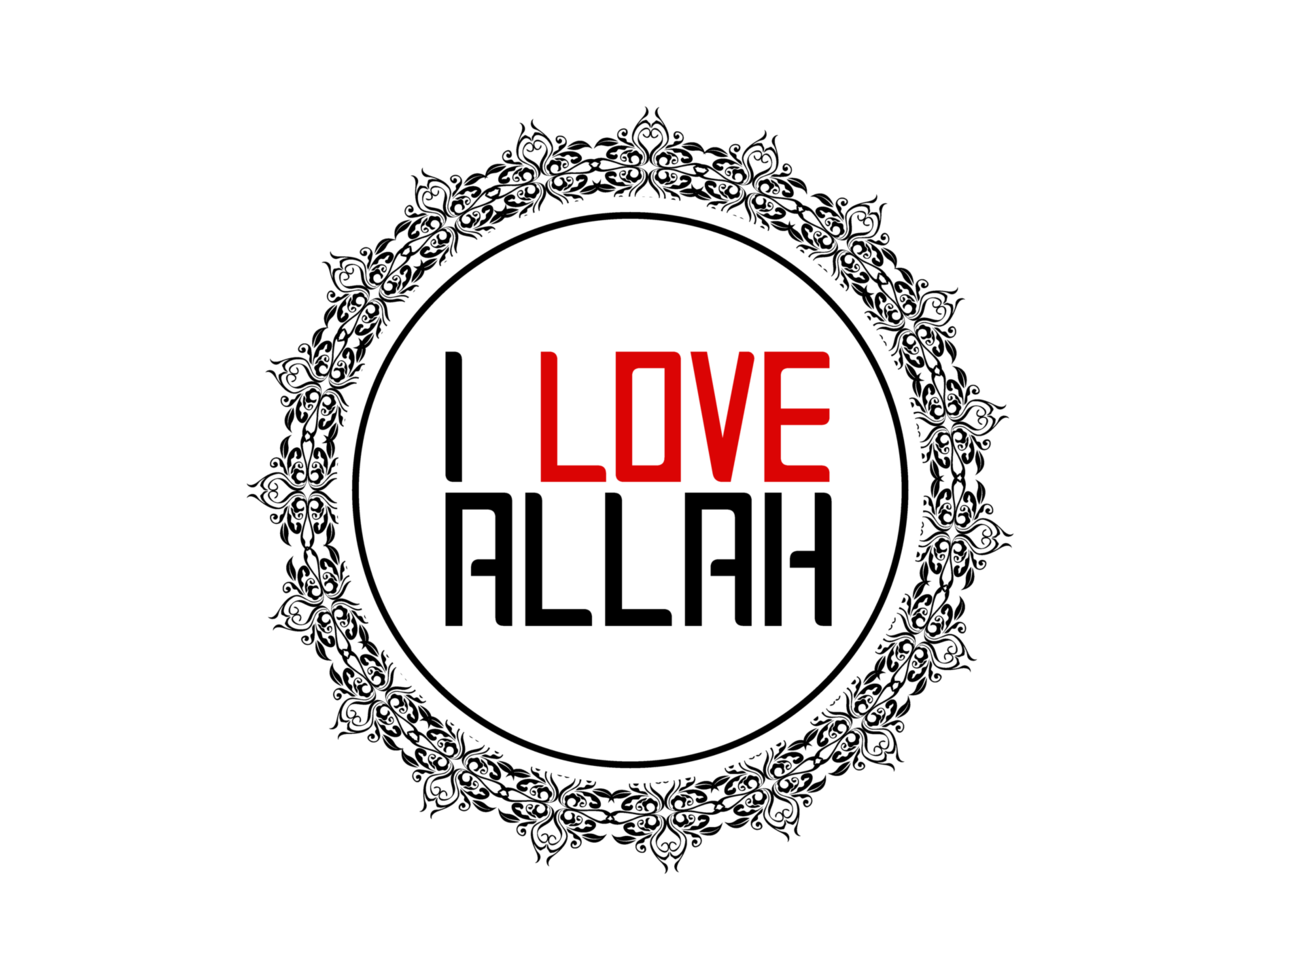 Islam Zitate - Ich liebe Allah png